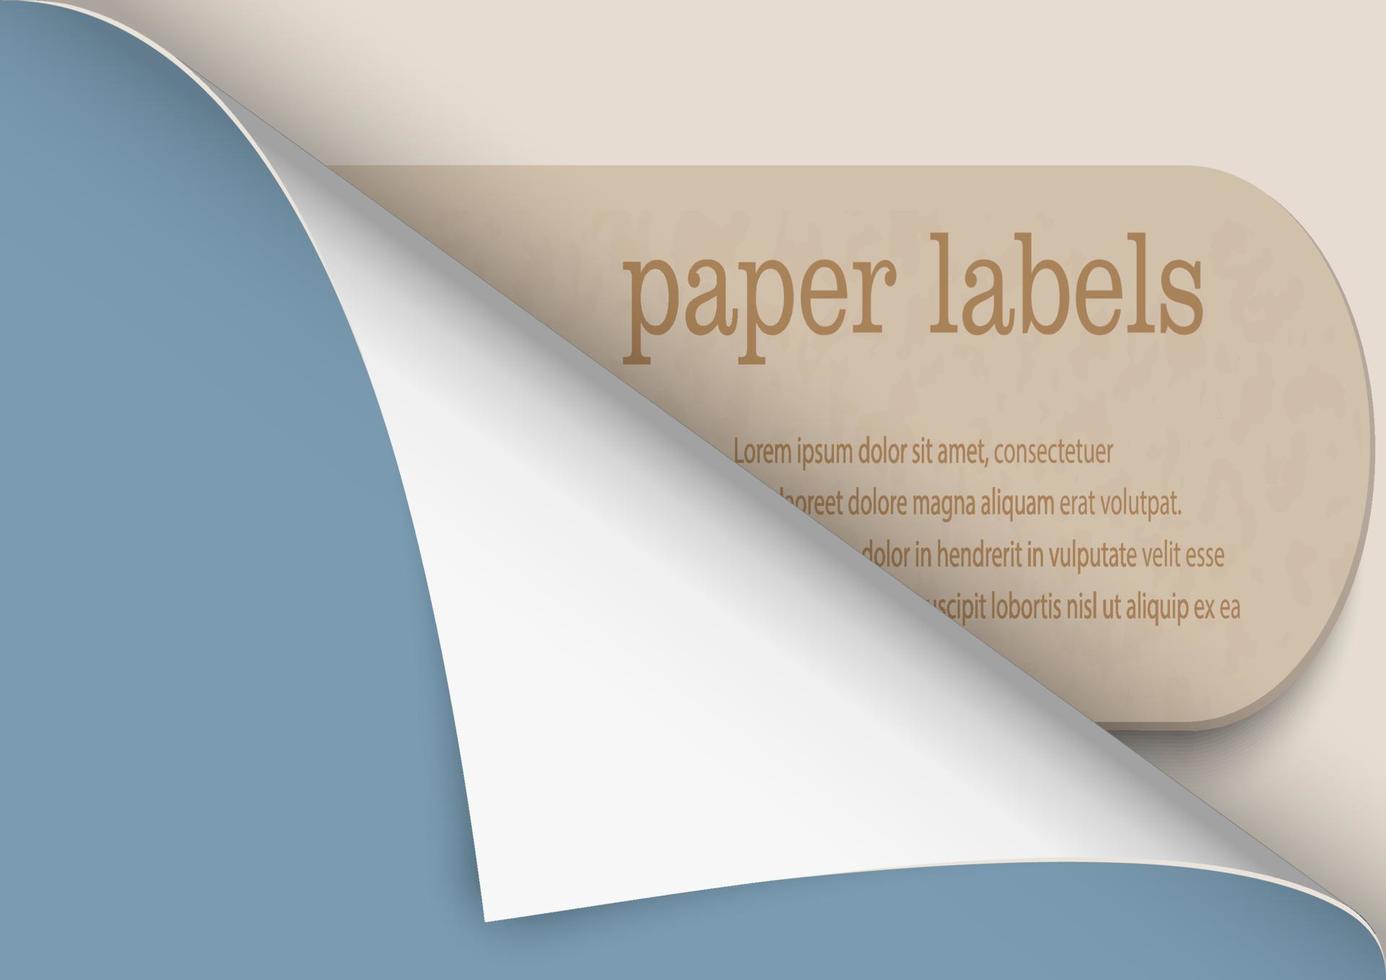 etiqueta de papel vacía vector